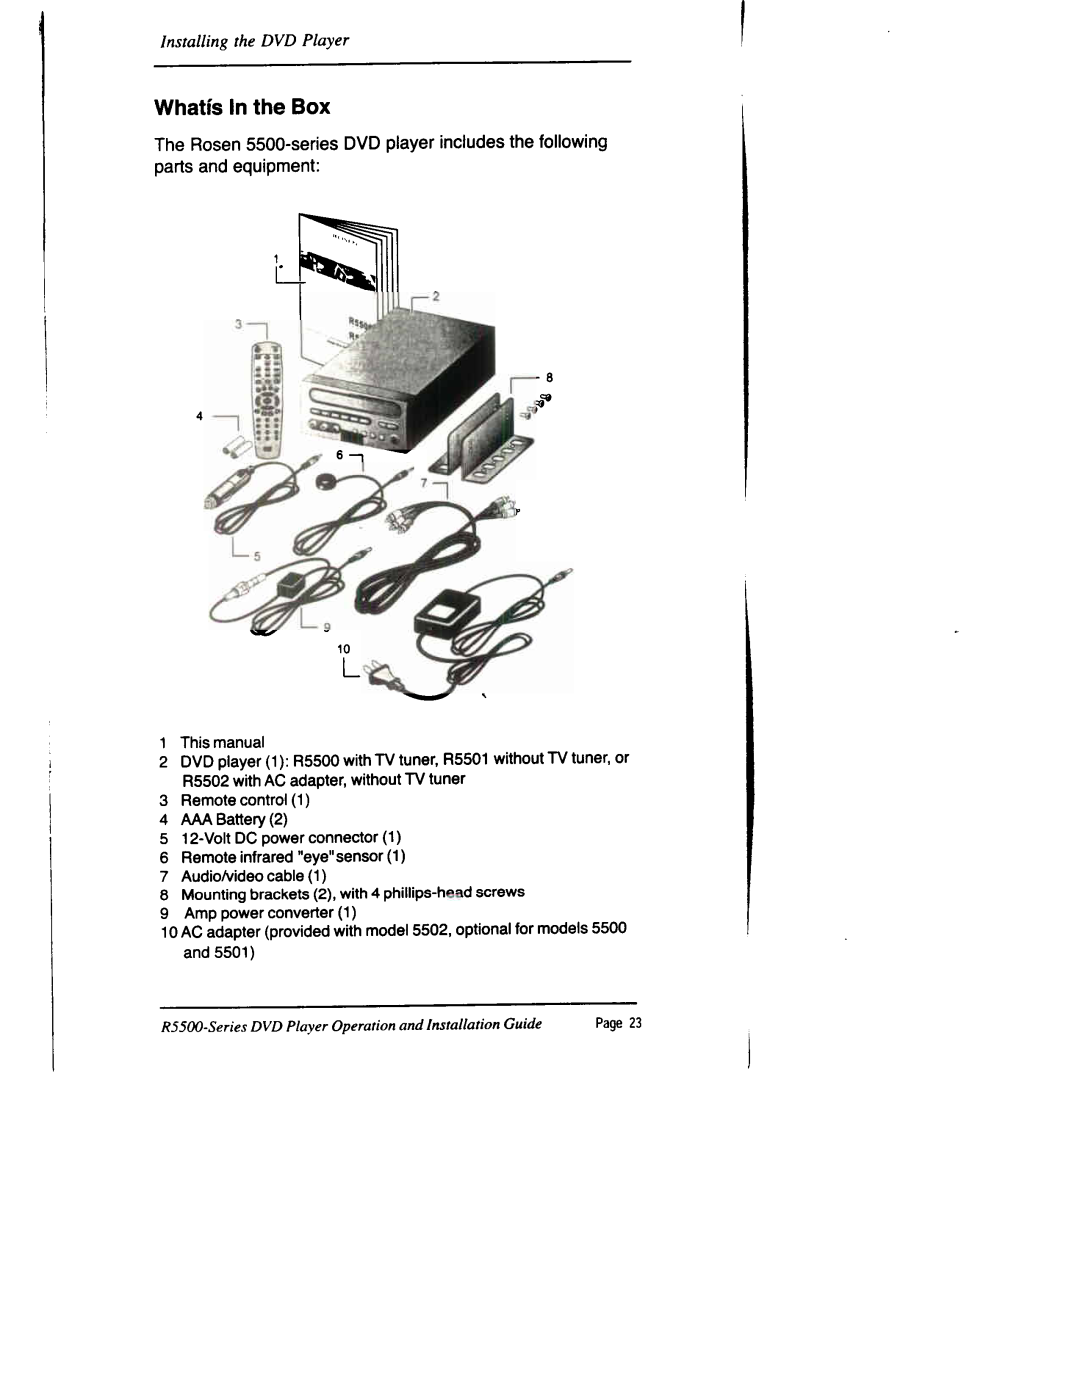 Rosen Entertainment Systems R5500, R5501, R5502 manual 